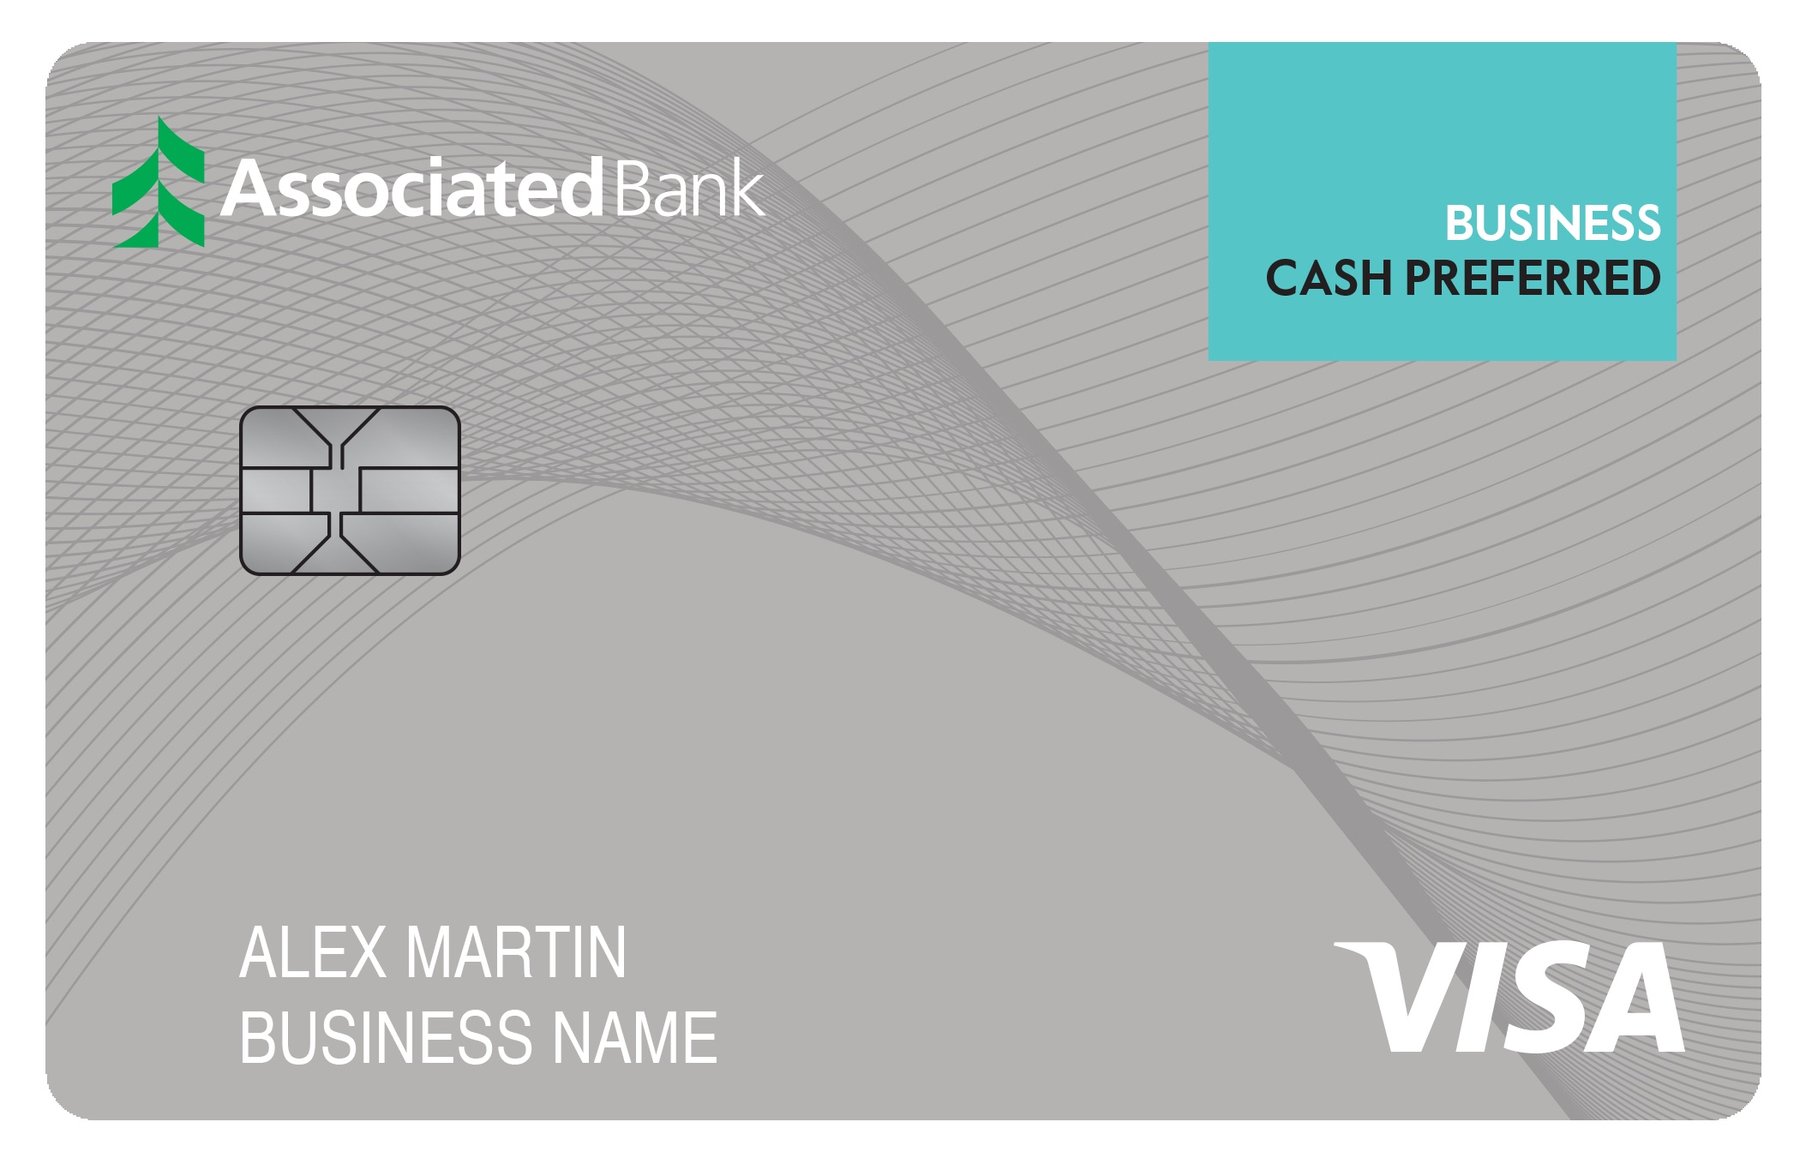 Associated Bank Visa® Business Cash Preferred Card